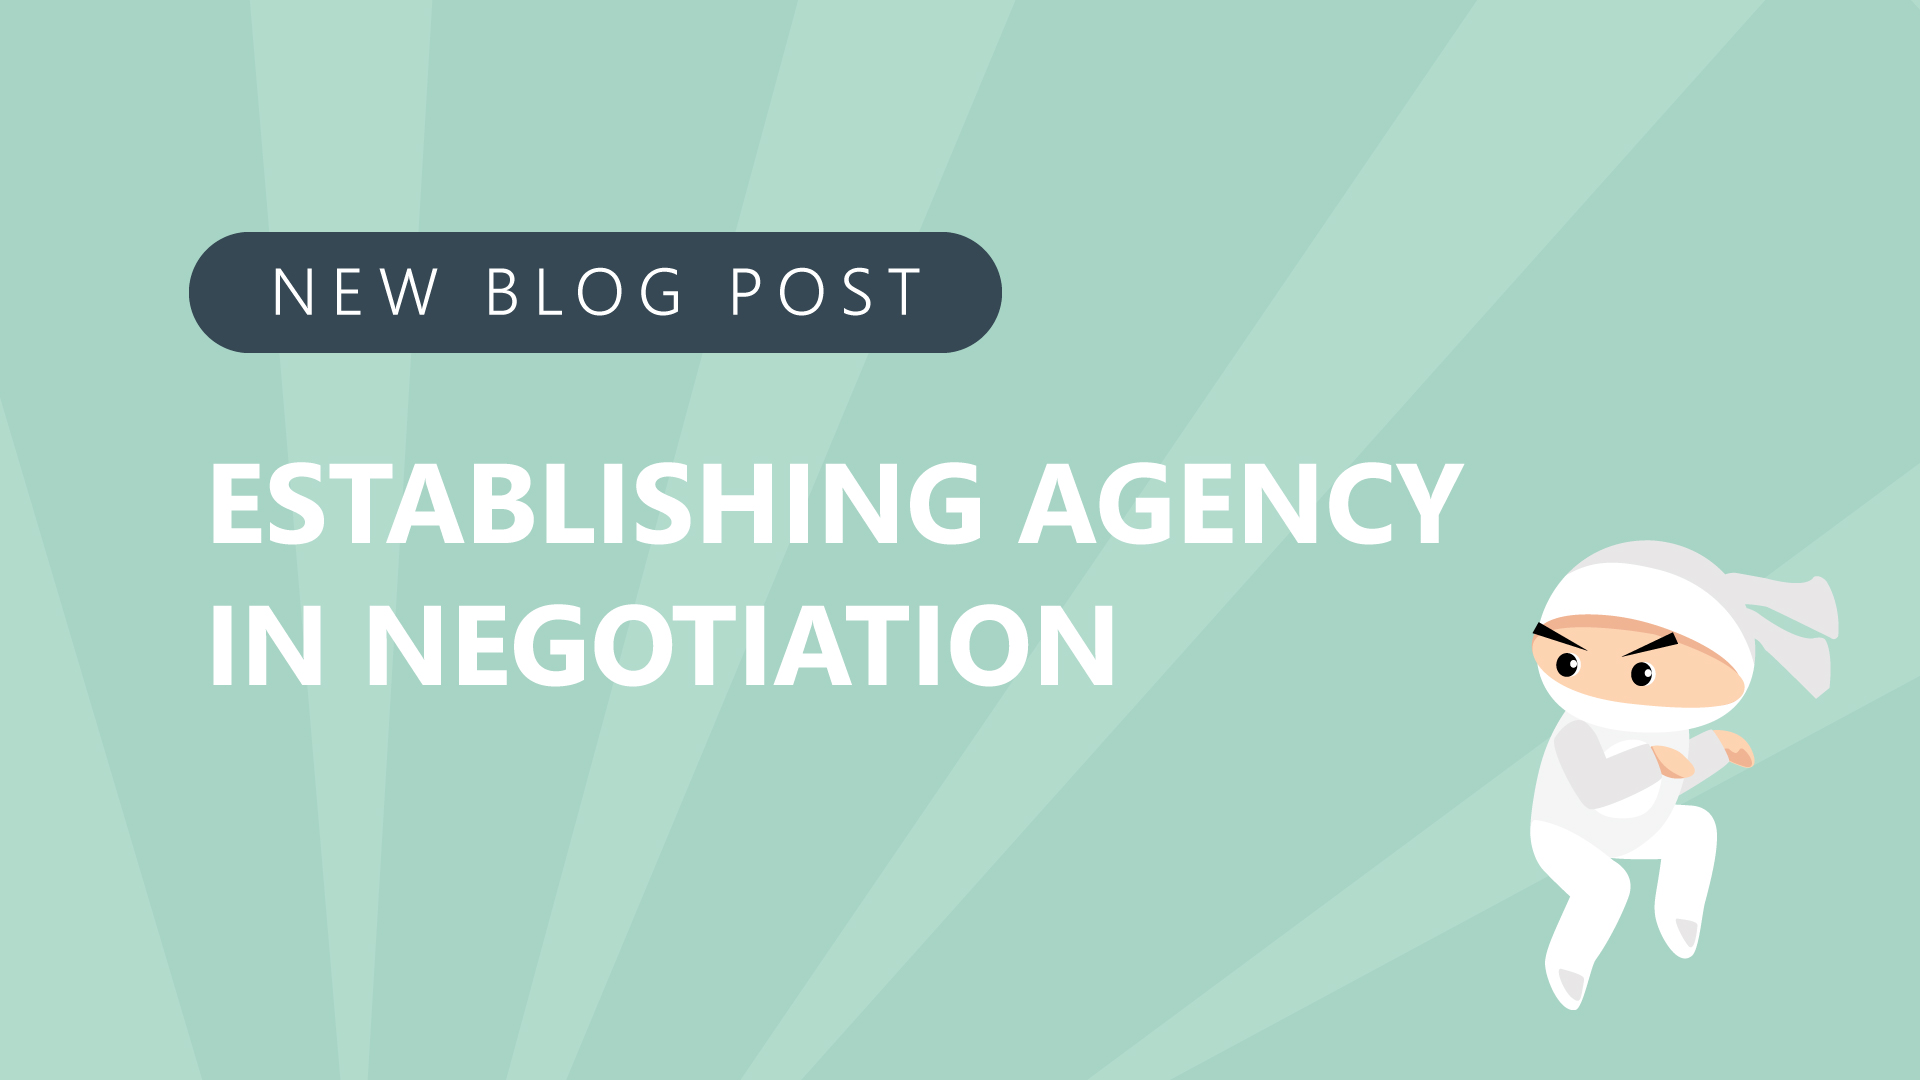 Agency in negotiation